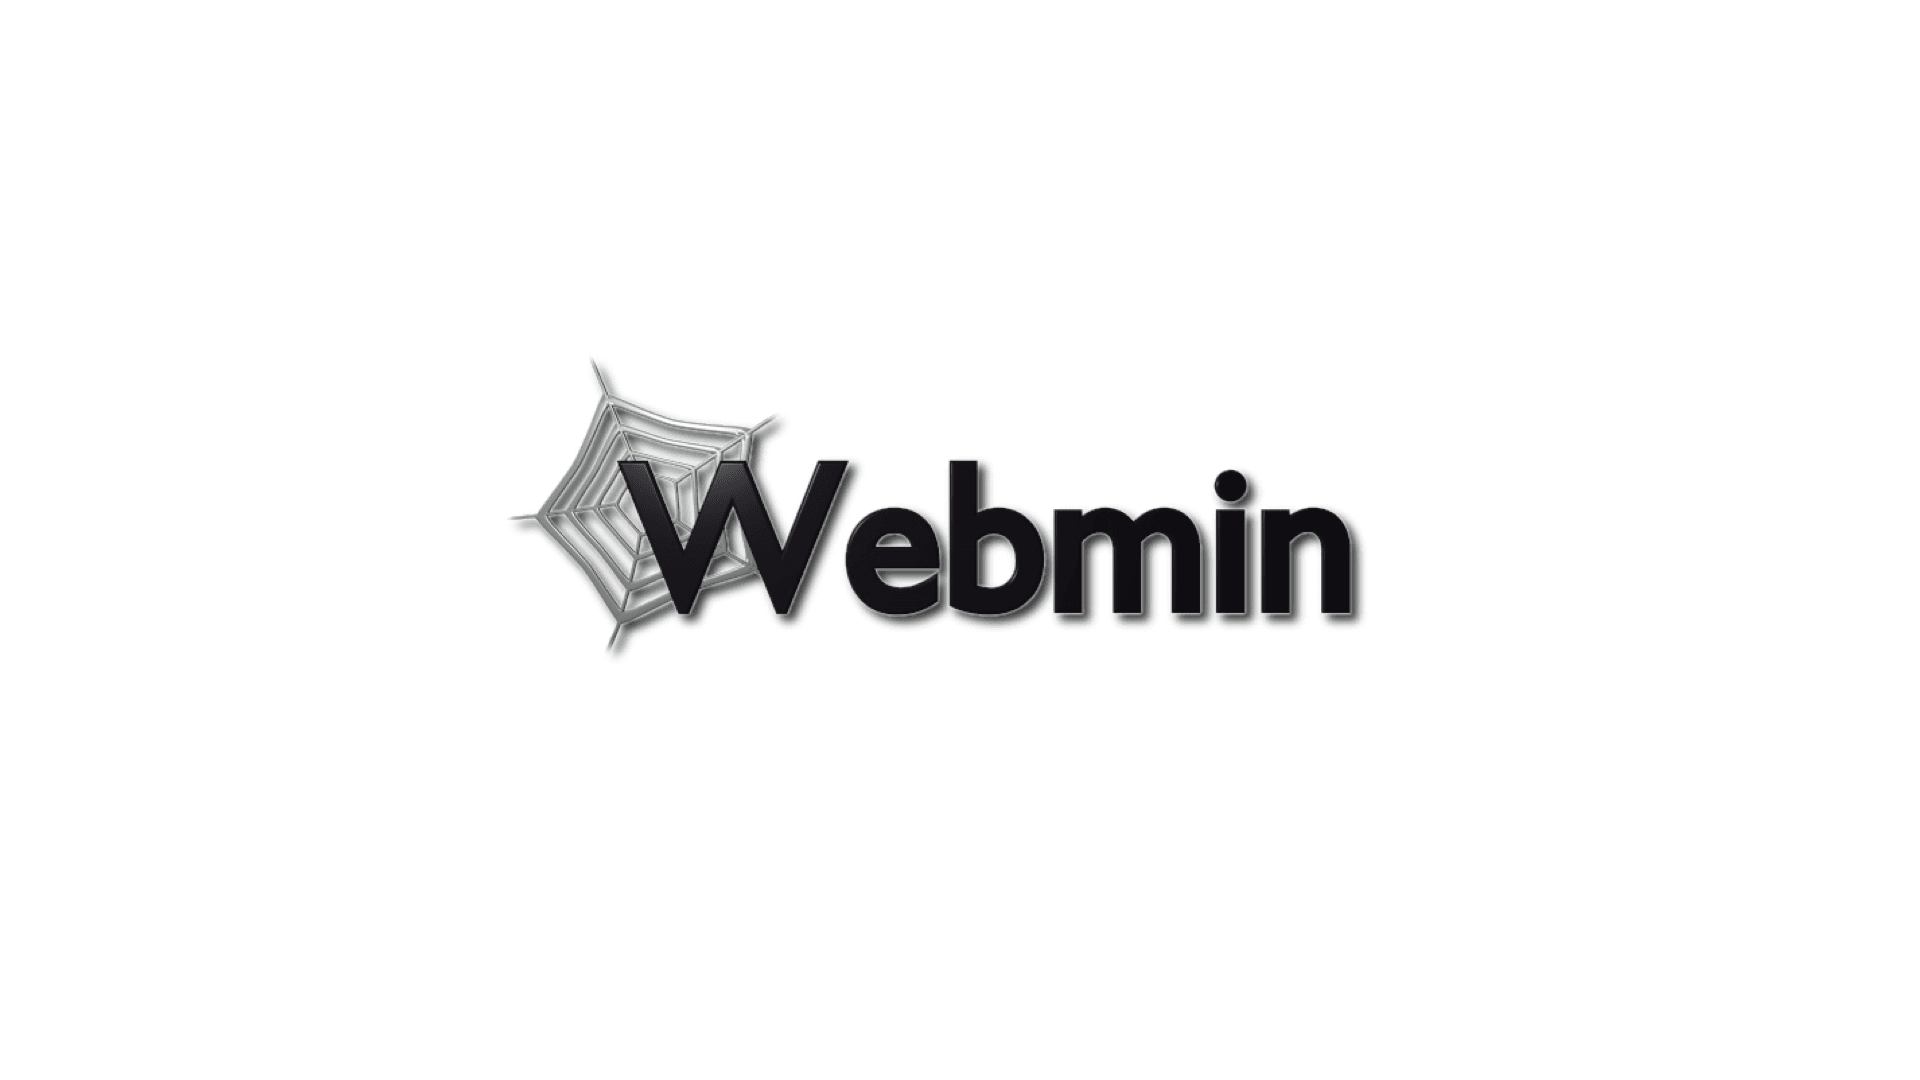 Linux-Webmin-Logo-1920